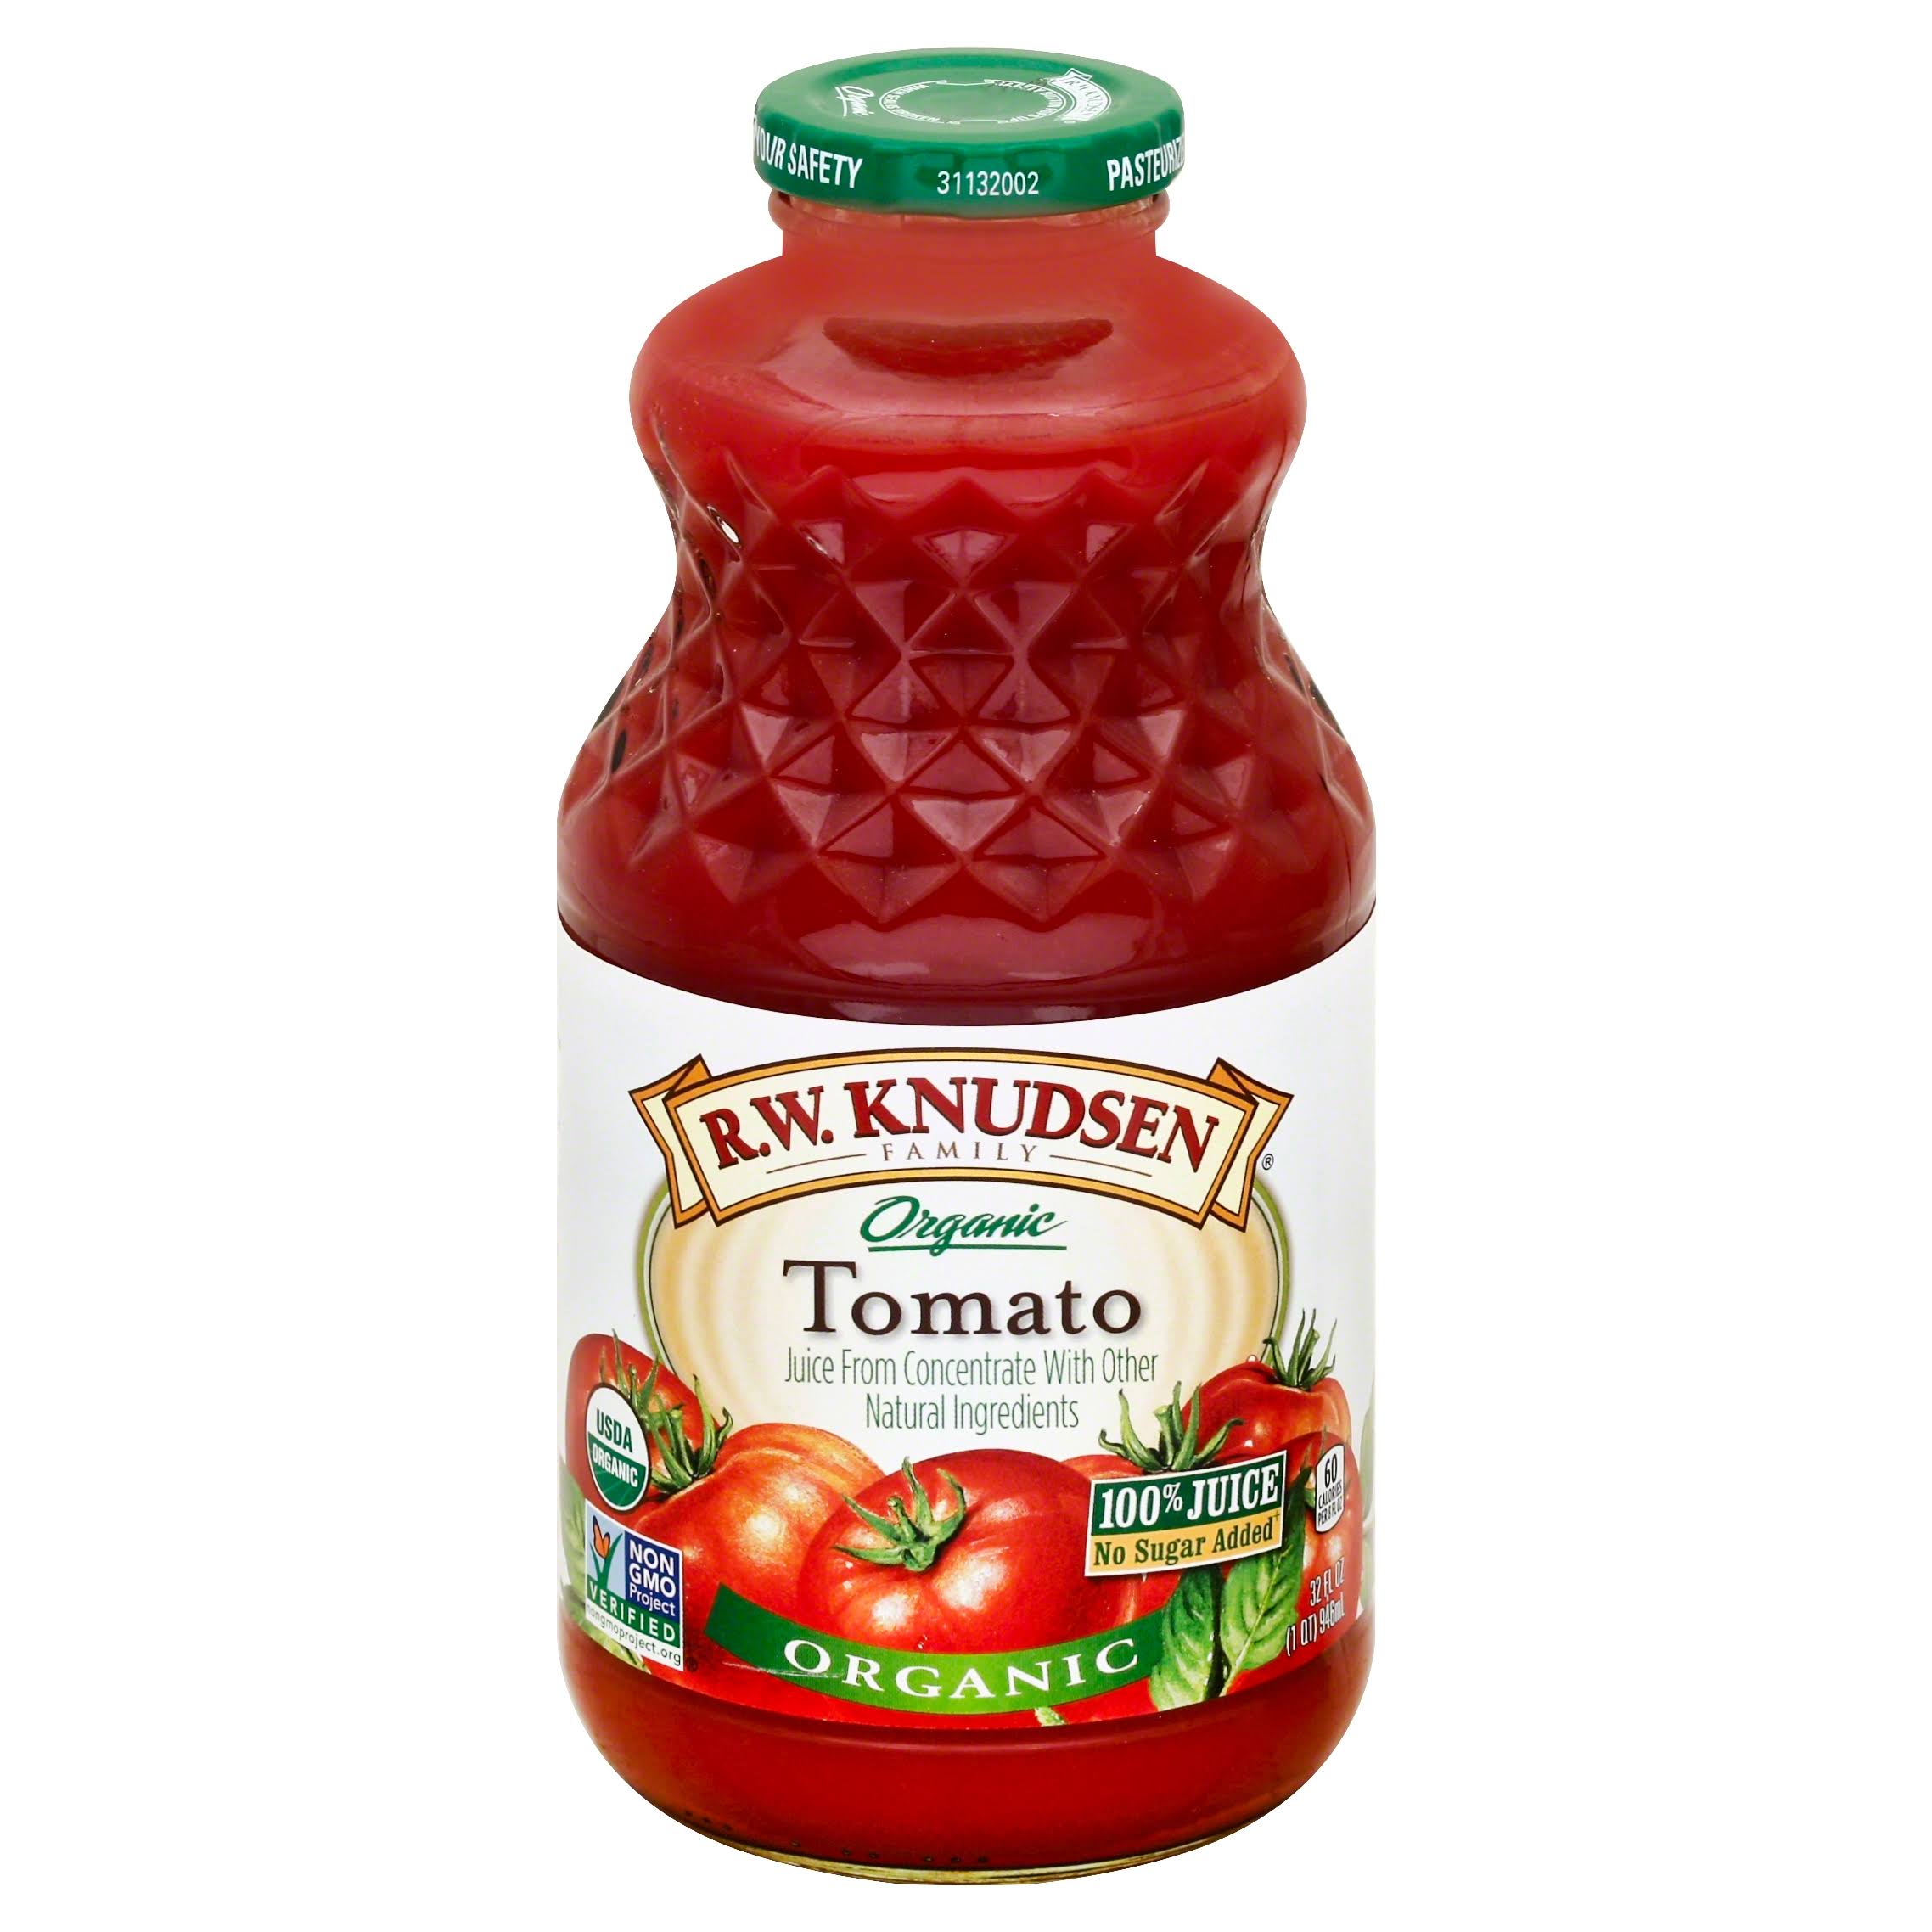 RW Knudsen 100% Juice, No Sugar Added, Organic, Tomato - 32 fl oz